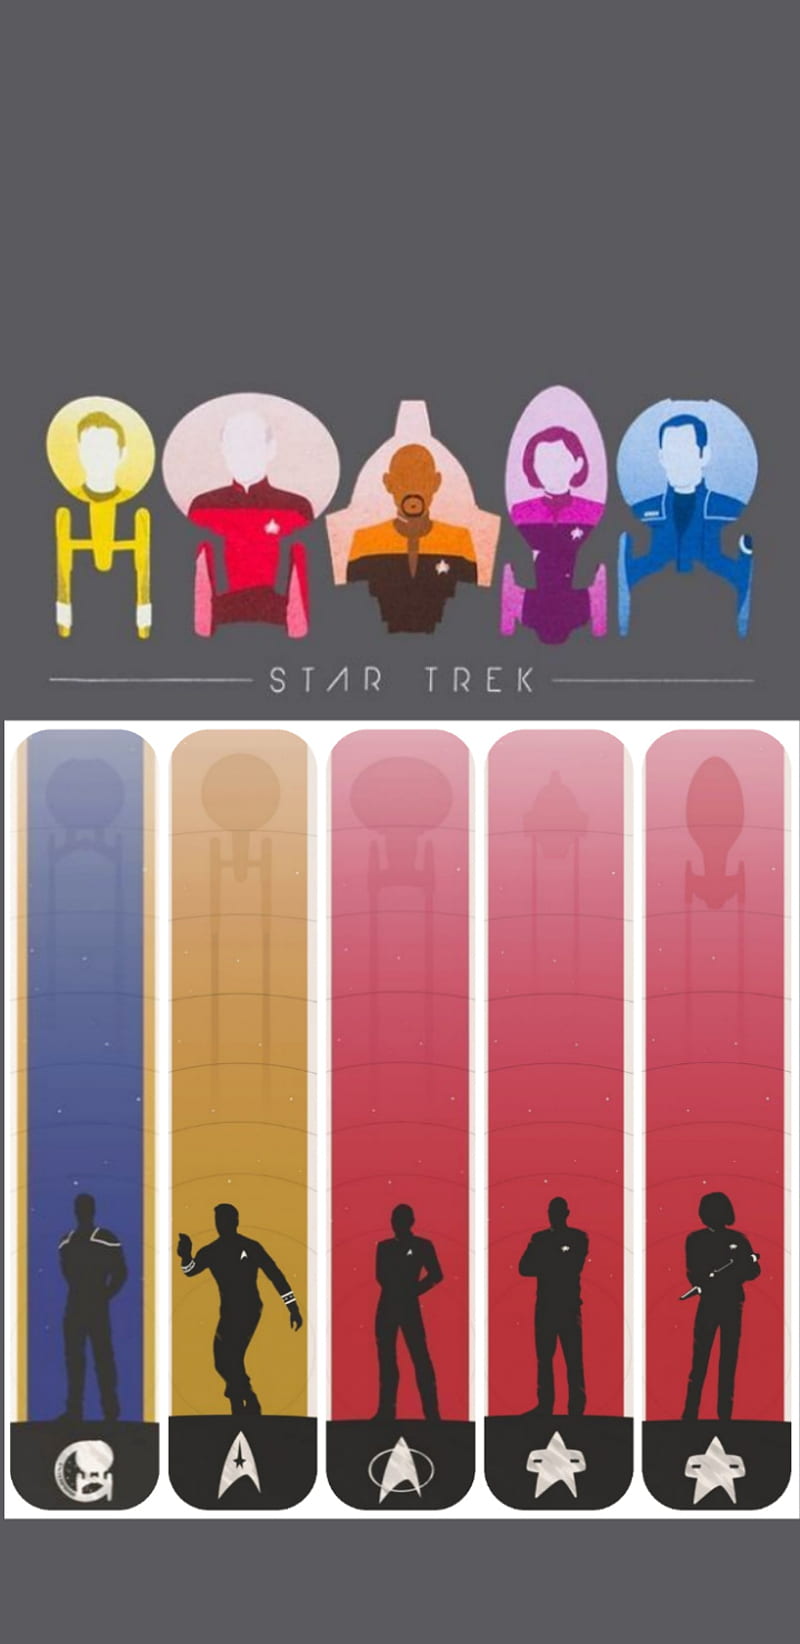 100+ Star Trek Phone Wallpapers - Mobile Abyss